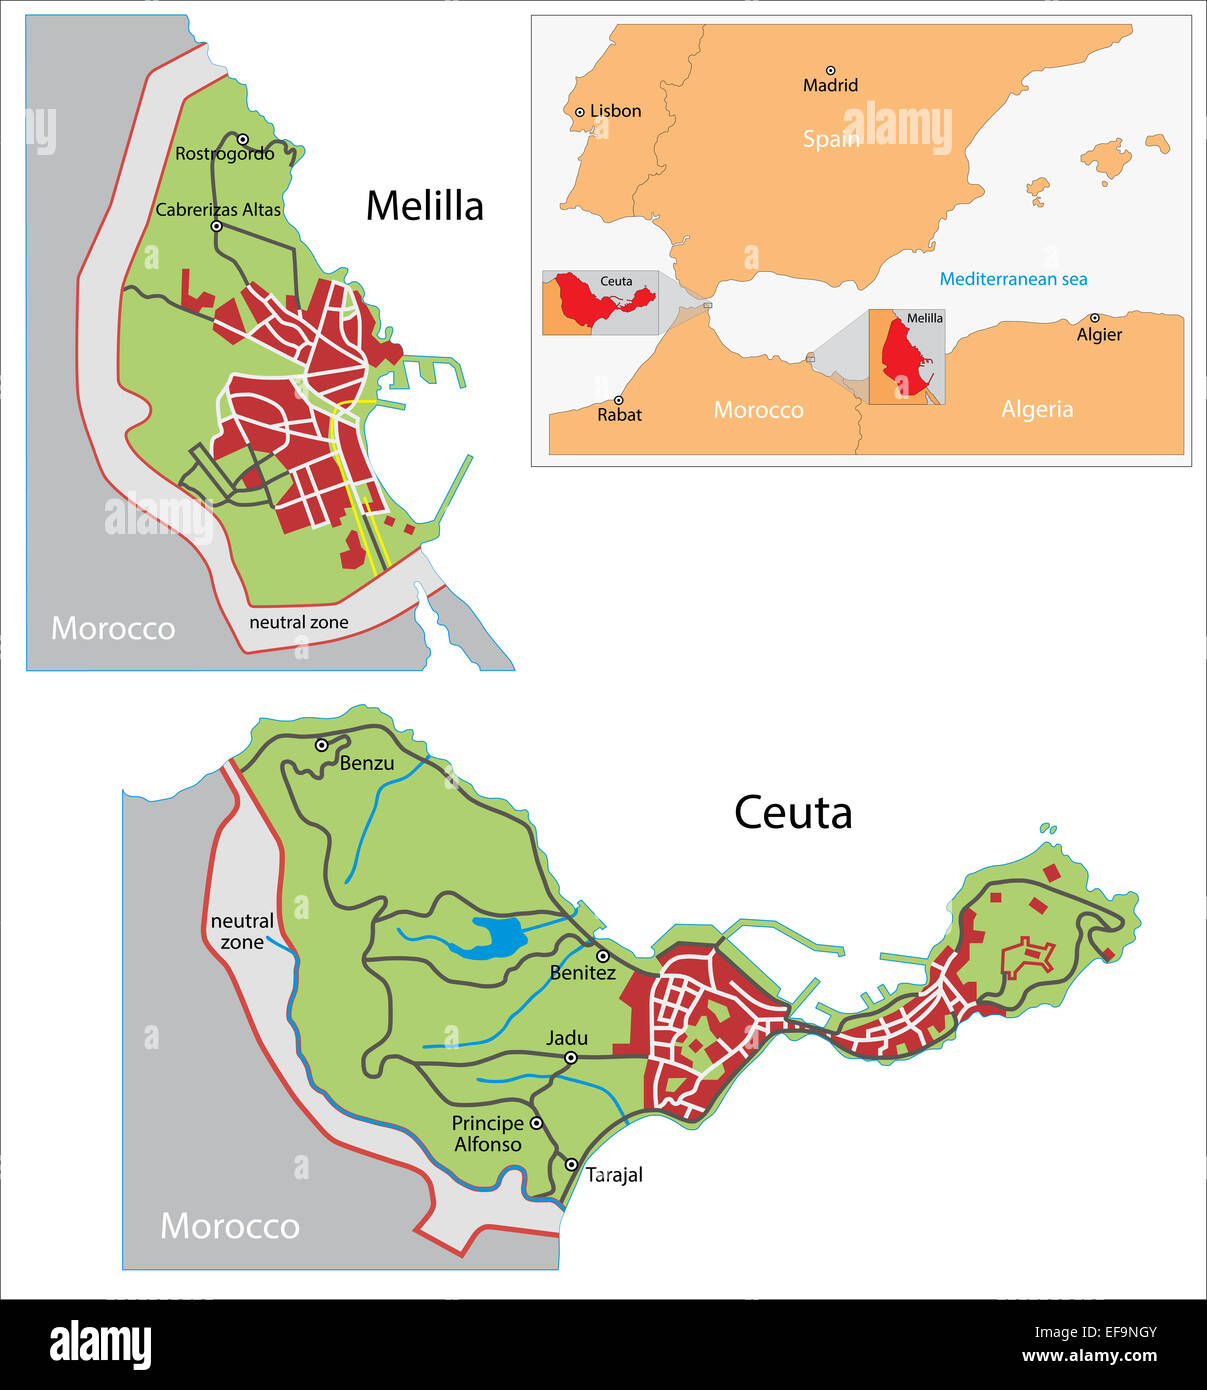 Ceuta and Melilla map Stock Photo